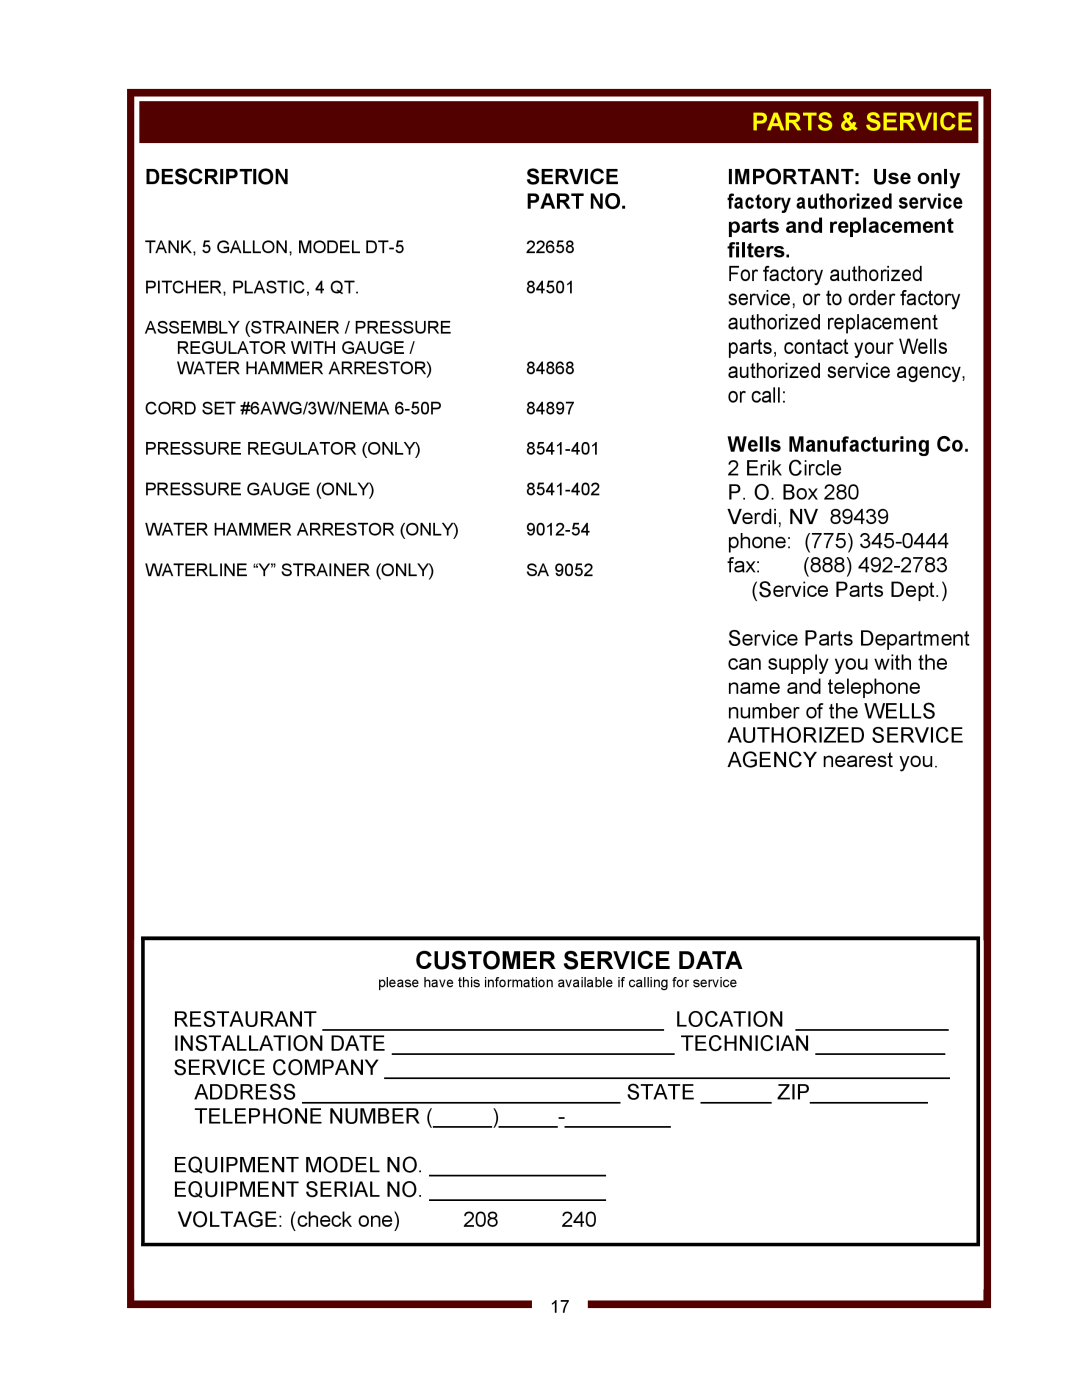 Wells WM-TR operation manual Parts & Service, Customer Service Data, Description, Wells Manufacturing Co 